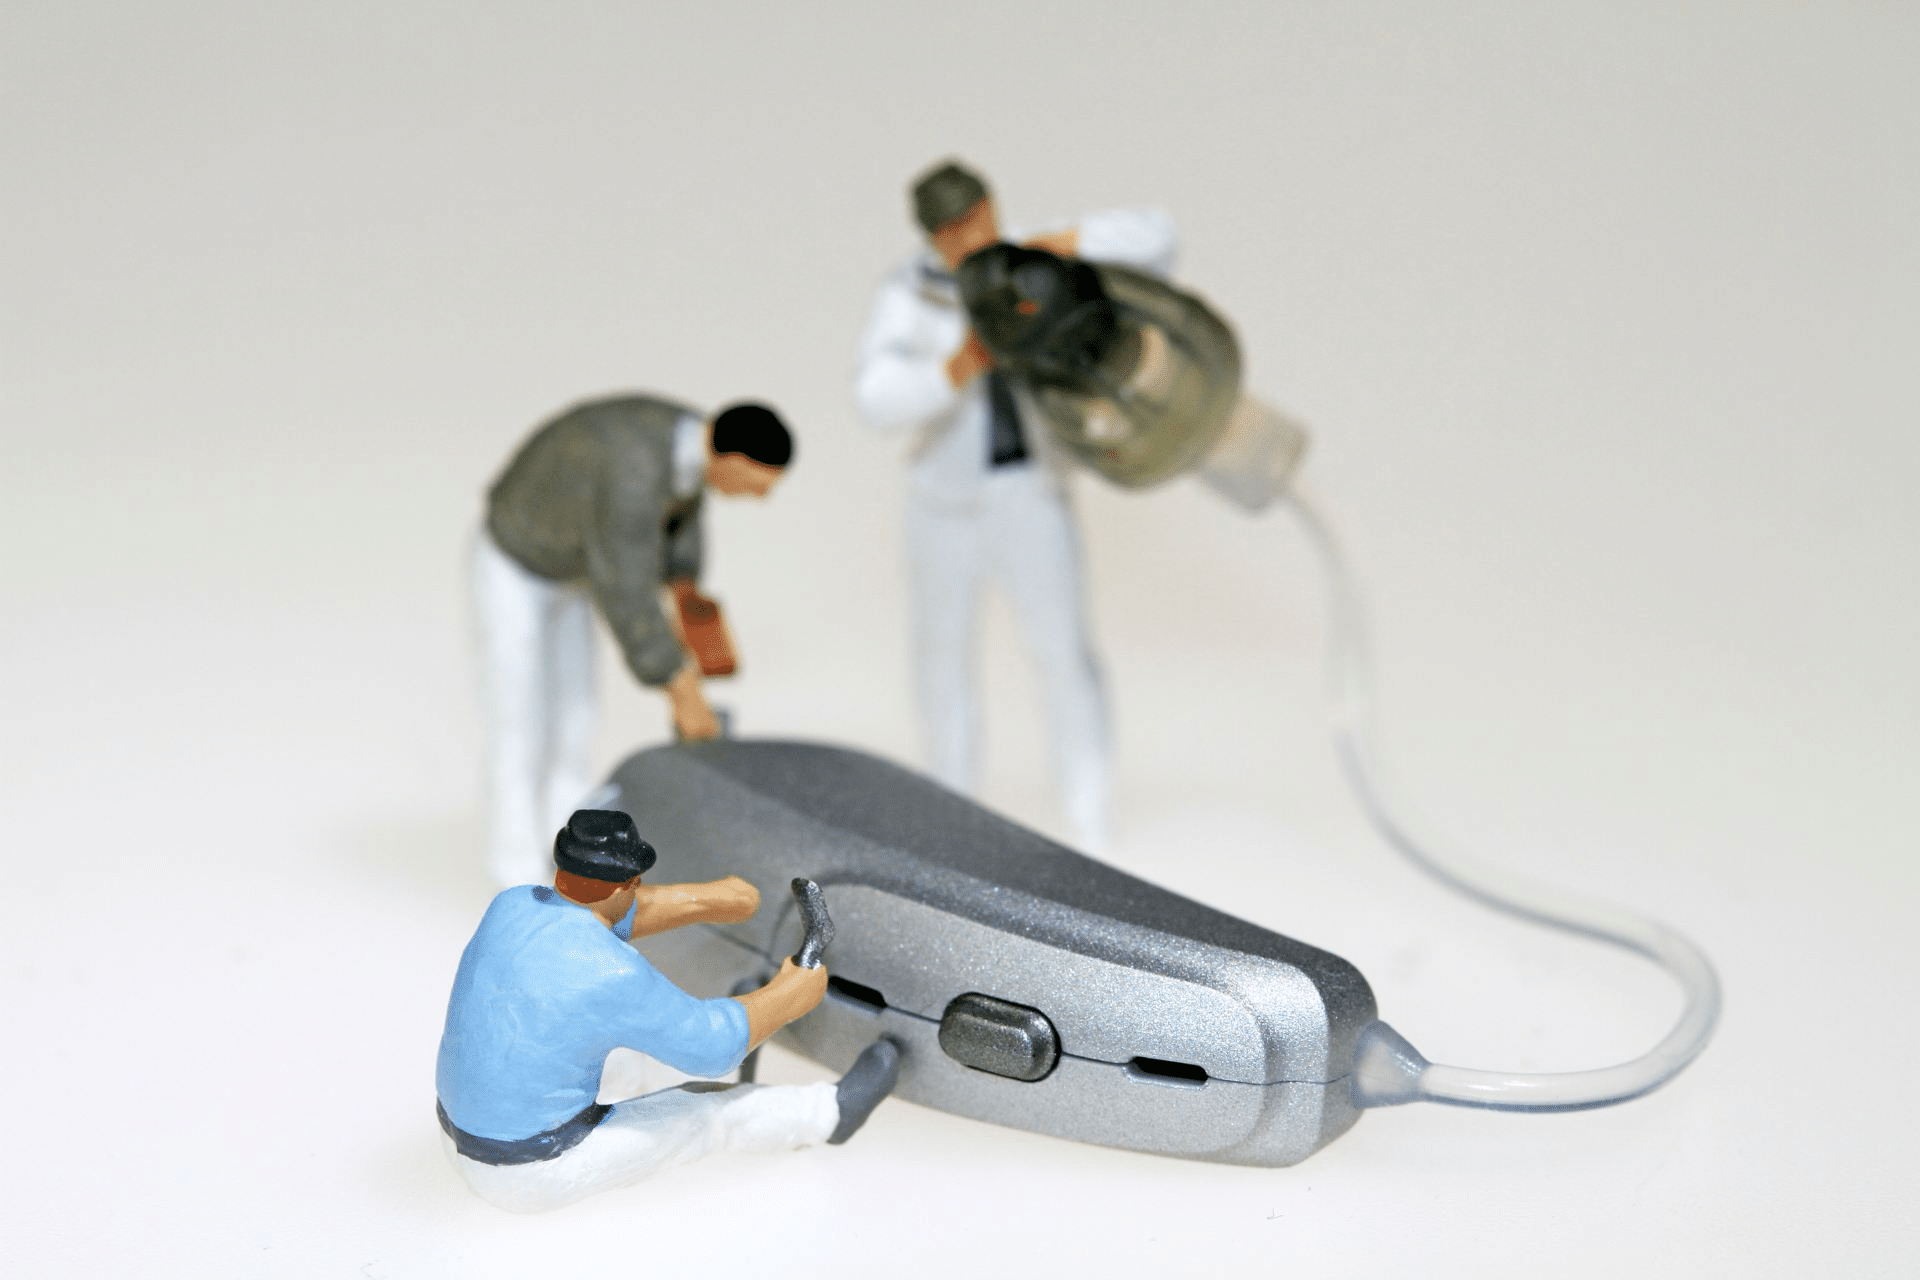 Three miniature figurines doing maintenance work on a hearing aid.